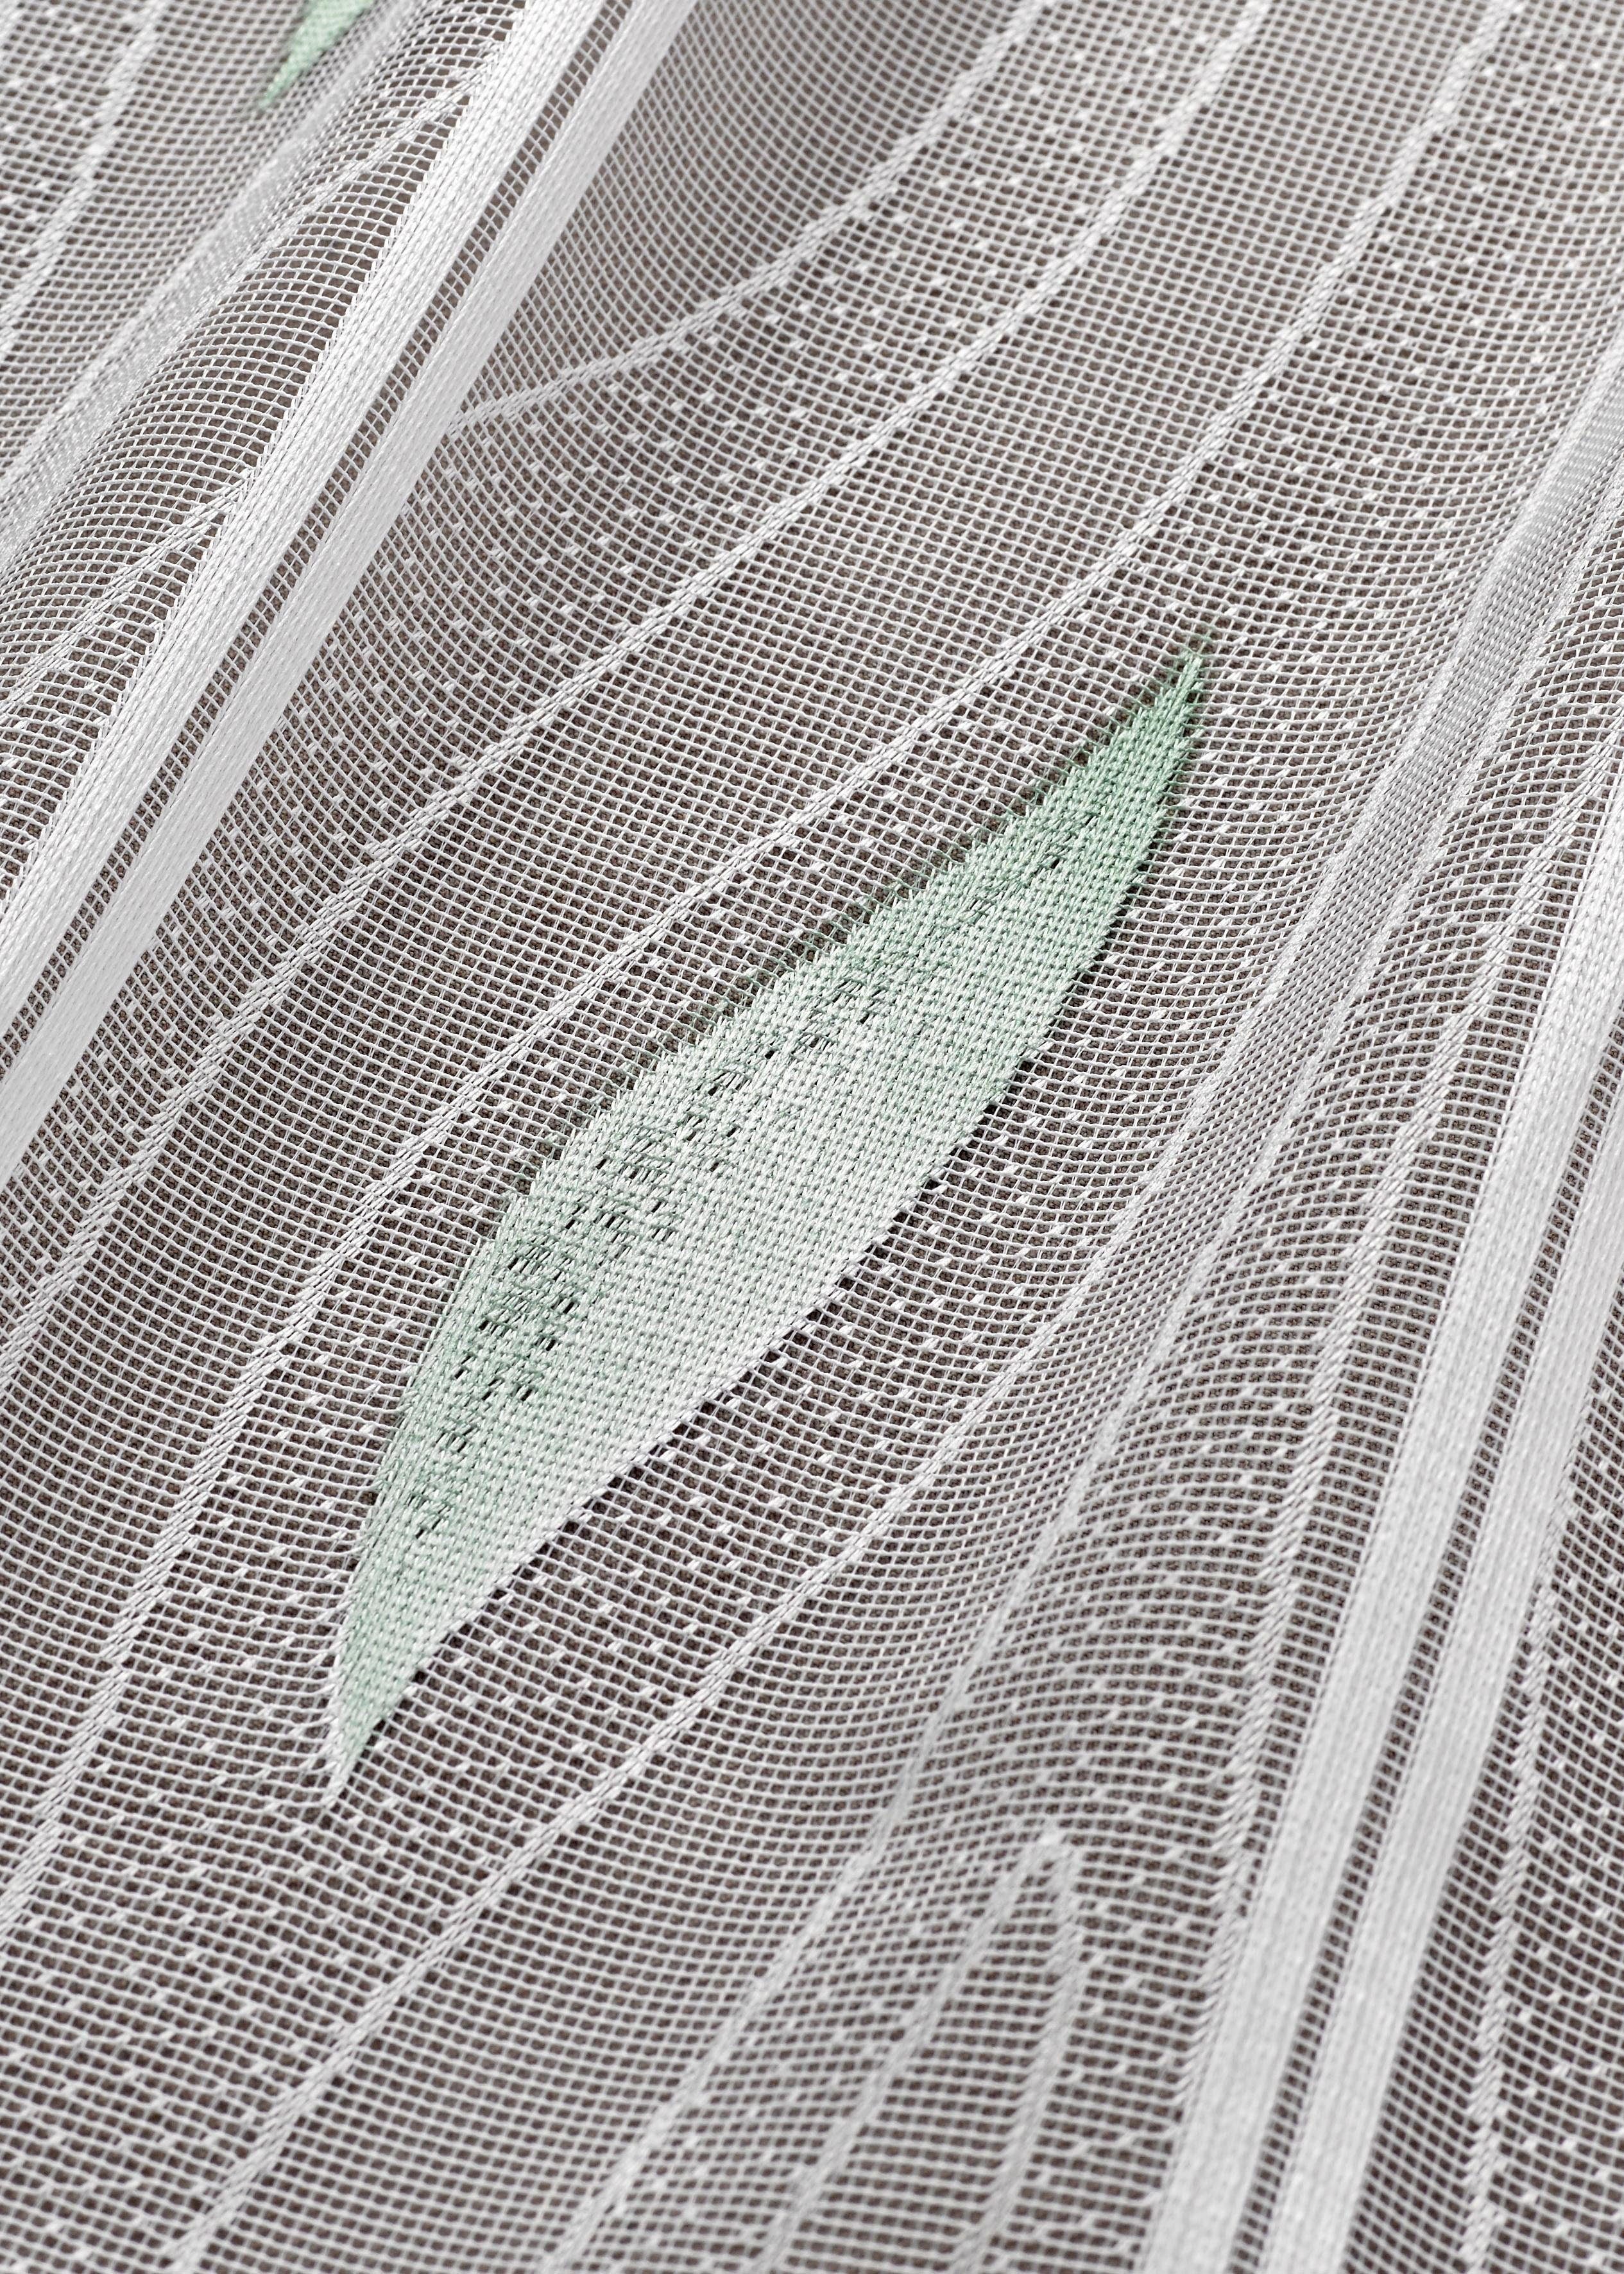 Scheibengardine Mathilda, VHG, Stangendurchzug transparent, (1 Jacquard St), grün/weiß/apricot